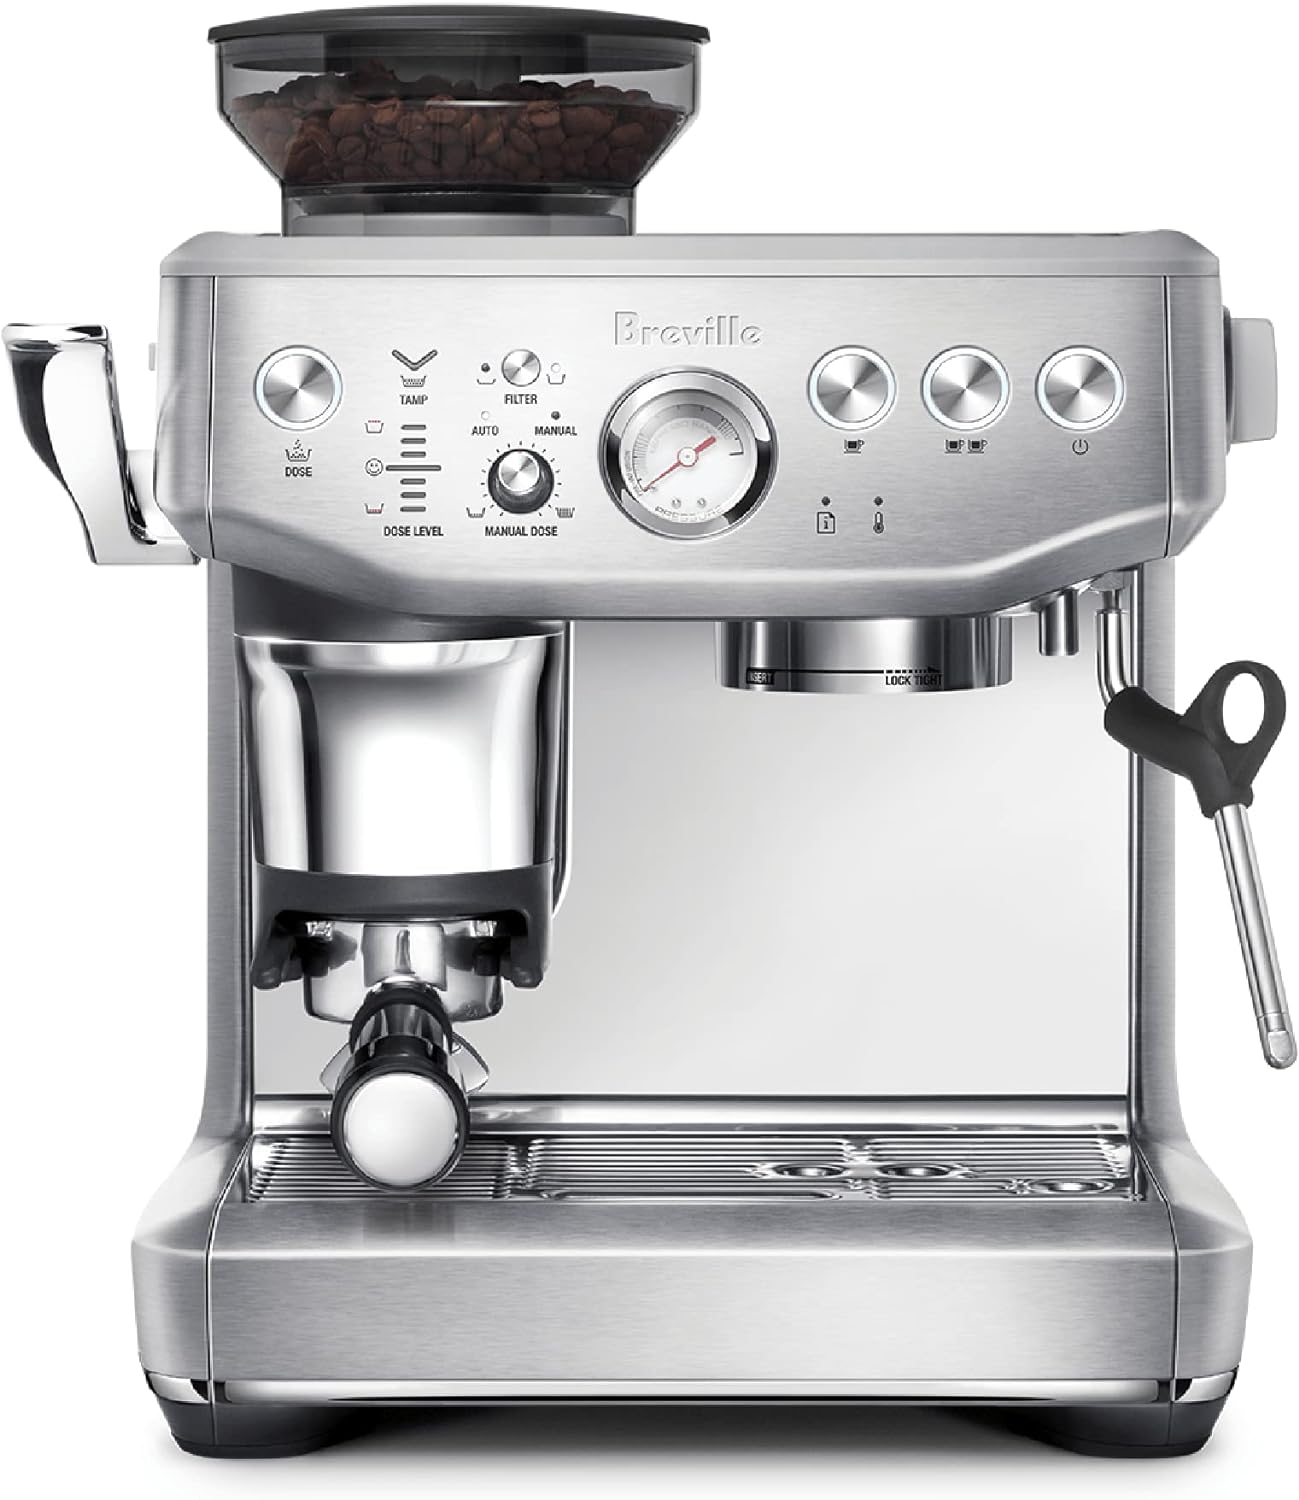 Breville Barista Express Impress Espresso Machine,BES876BSS $719.95